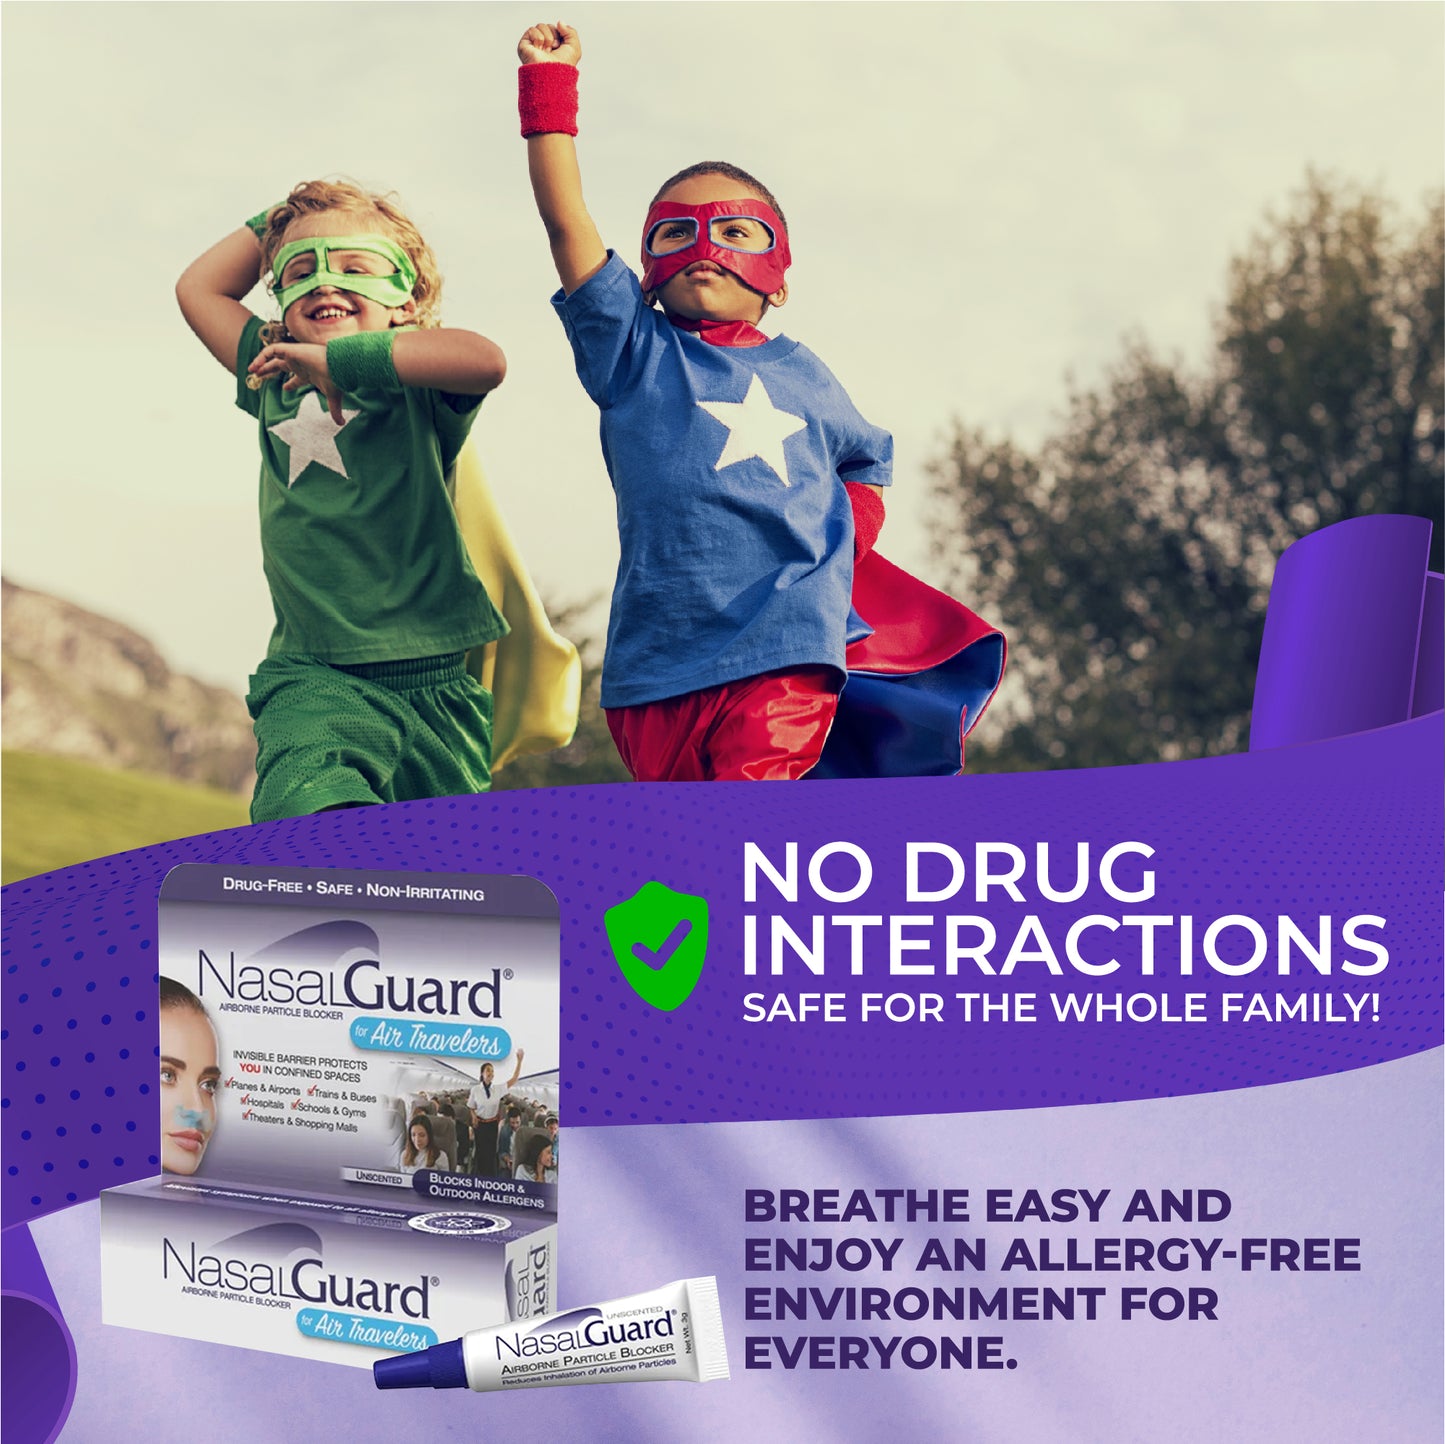 NasalGuard For Kids, Allergy Relief Nasal Gel | Unscented | 3g Tube